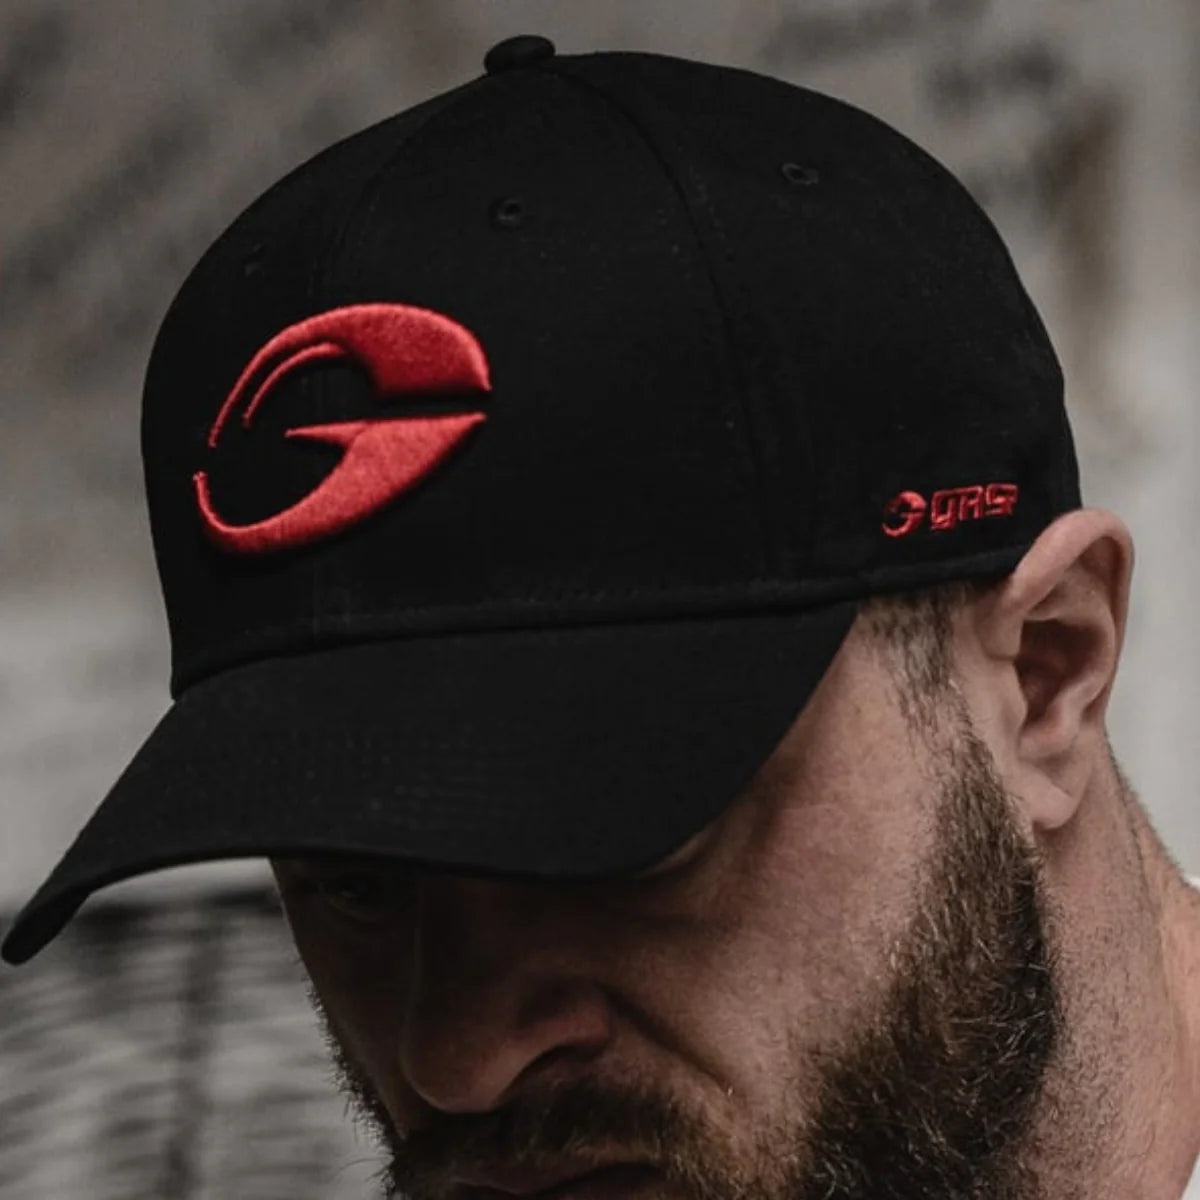 Gasp Baseball Cap (Black/Red)